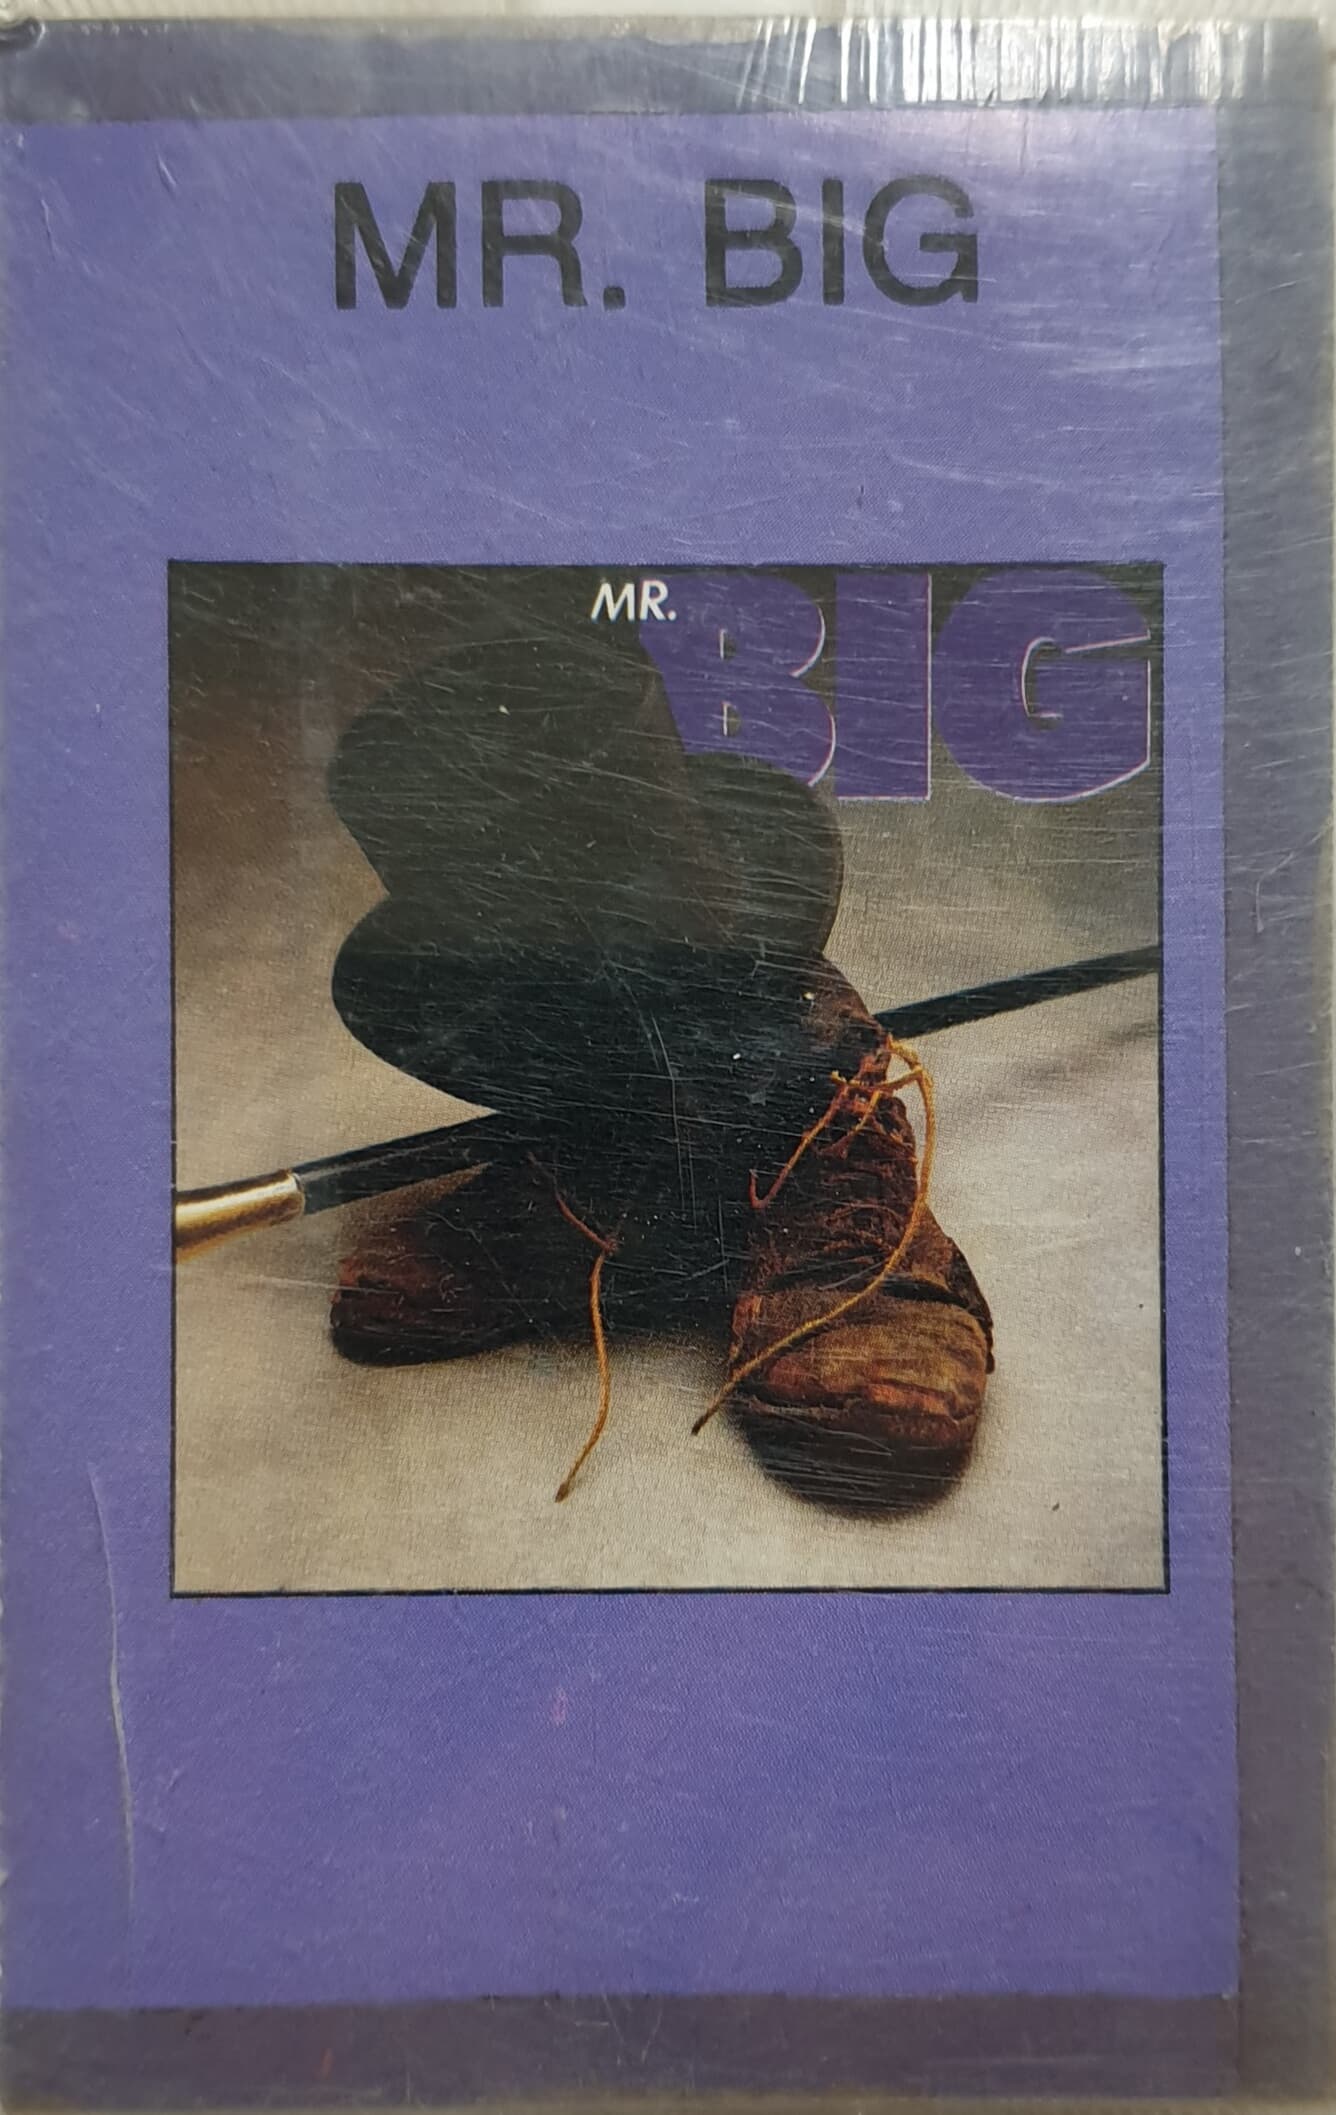 MR. BIG - MR. BIG [1989] + LIVE: KICKING & SCREAMING [1992] [2 CASSETTE TAPE][반품절대불가]